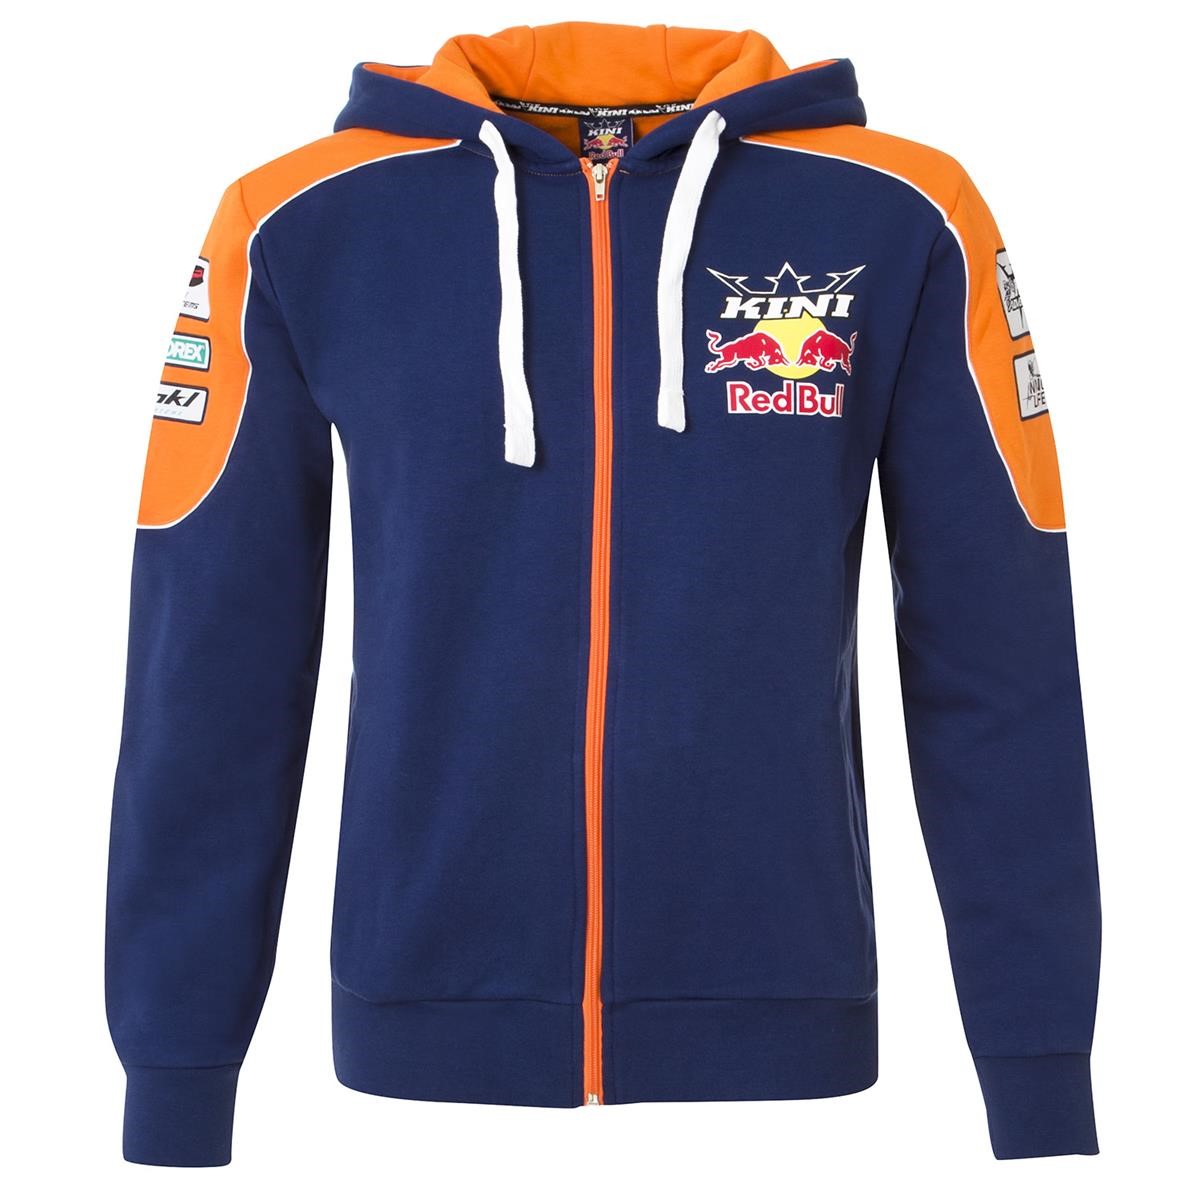 Kini Red Bull Zip Hoody Team Orange/Navy